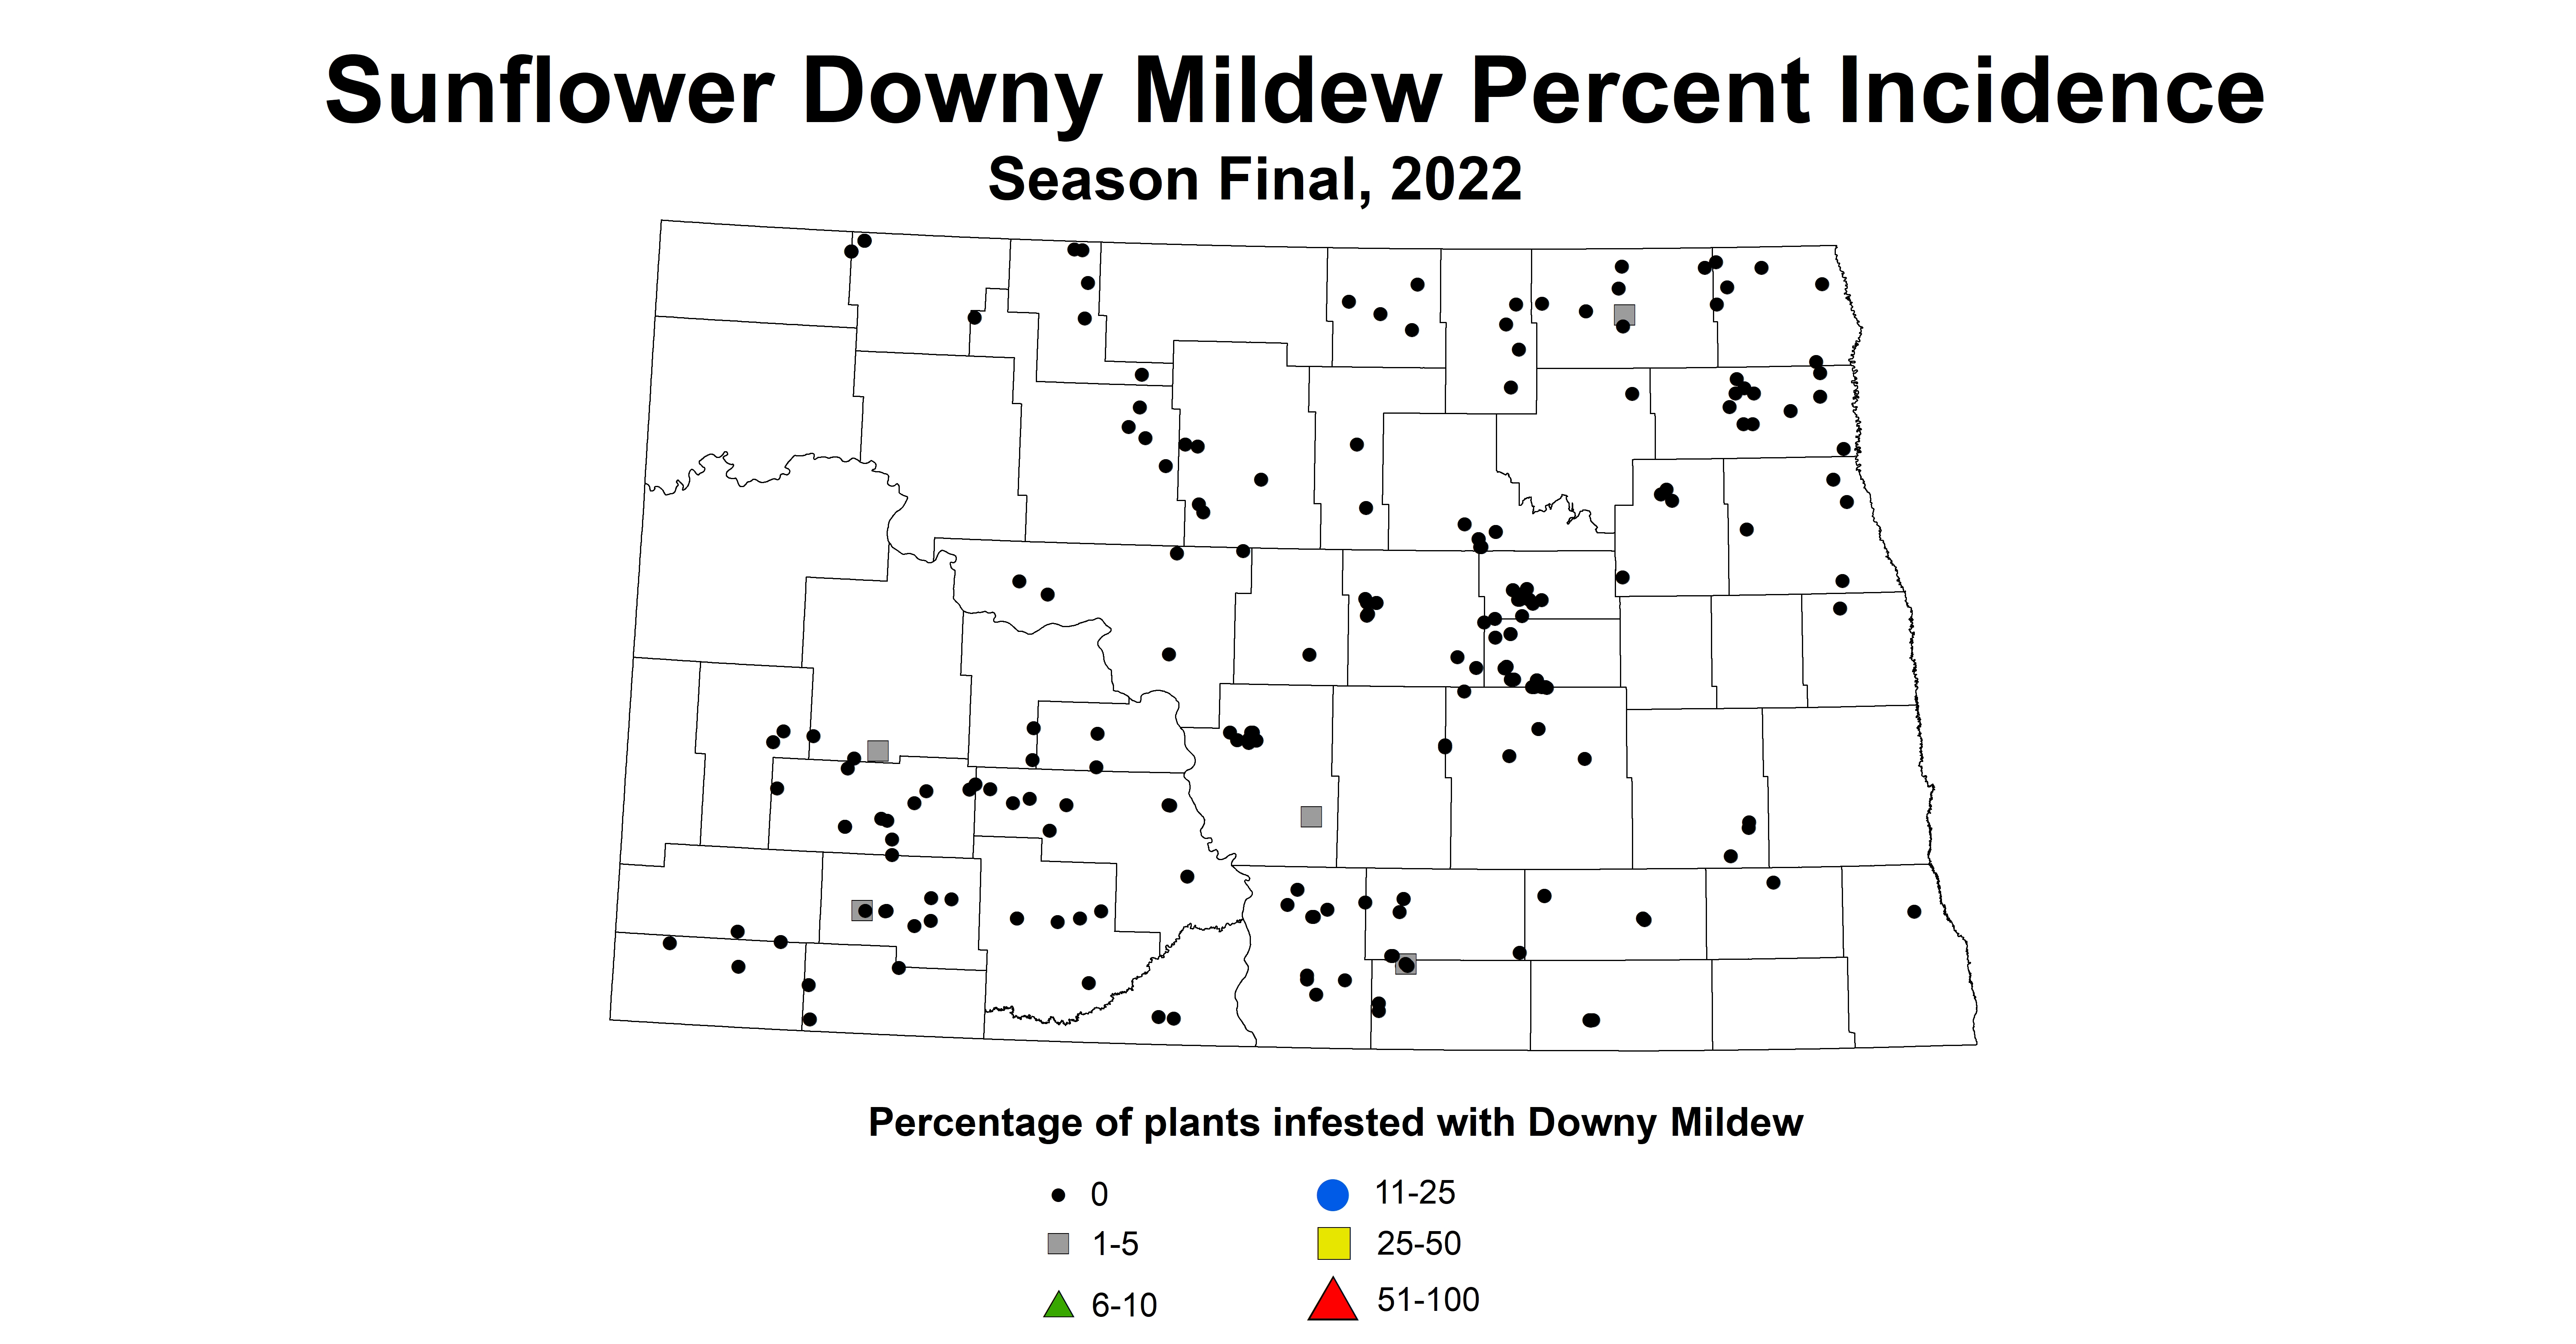 sunflower downy mildew incidence 2022 season final